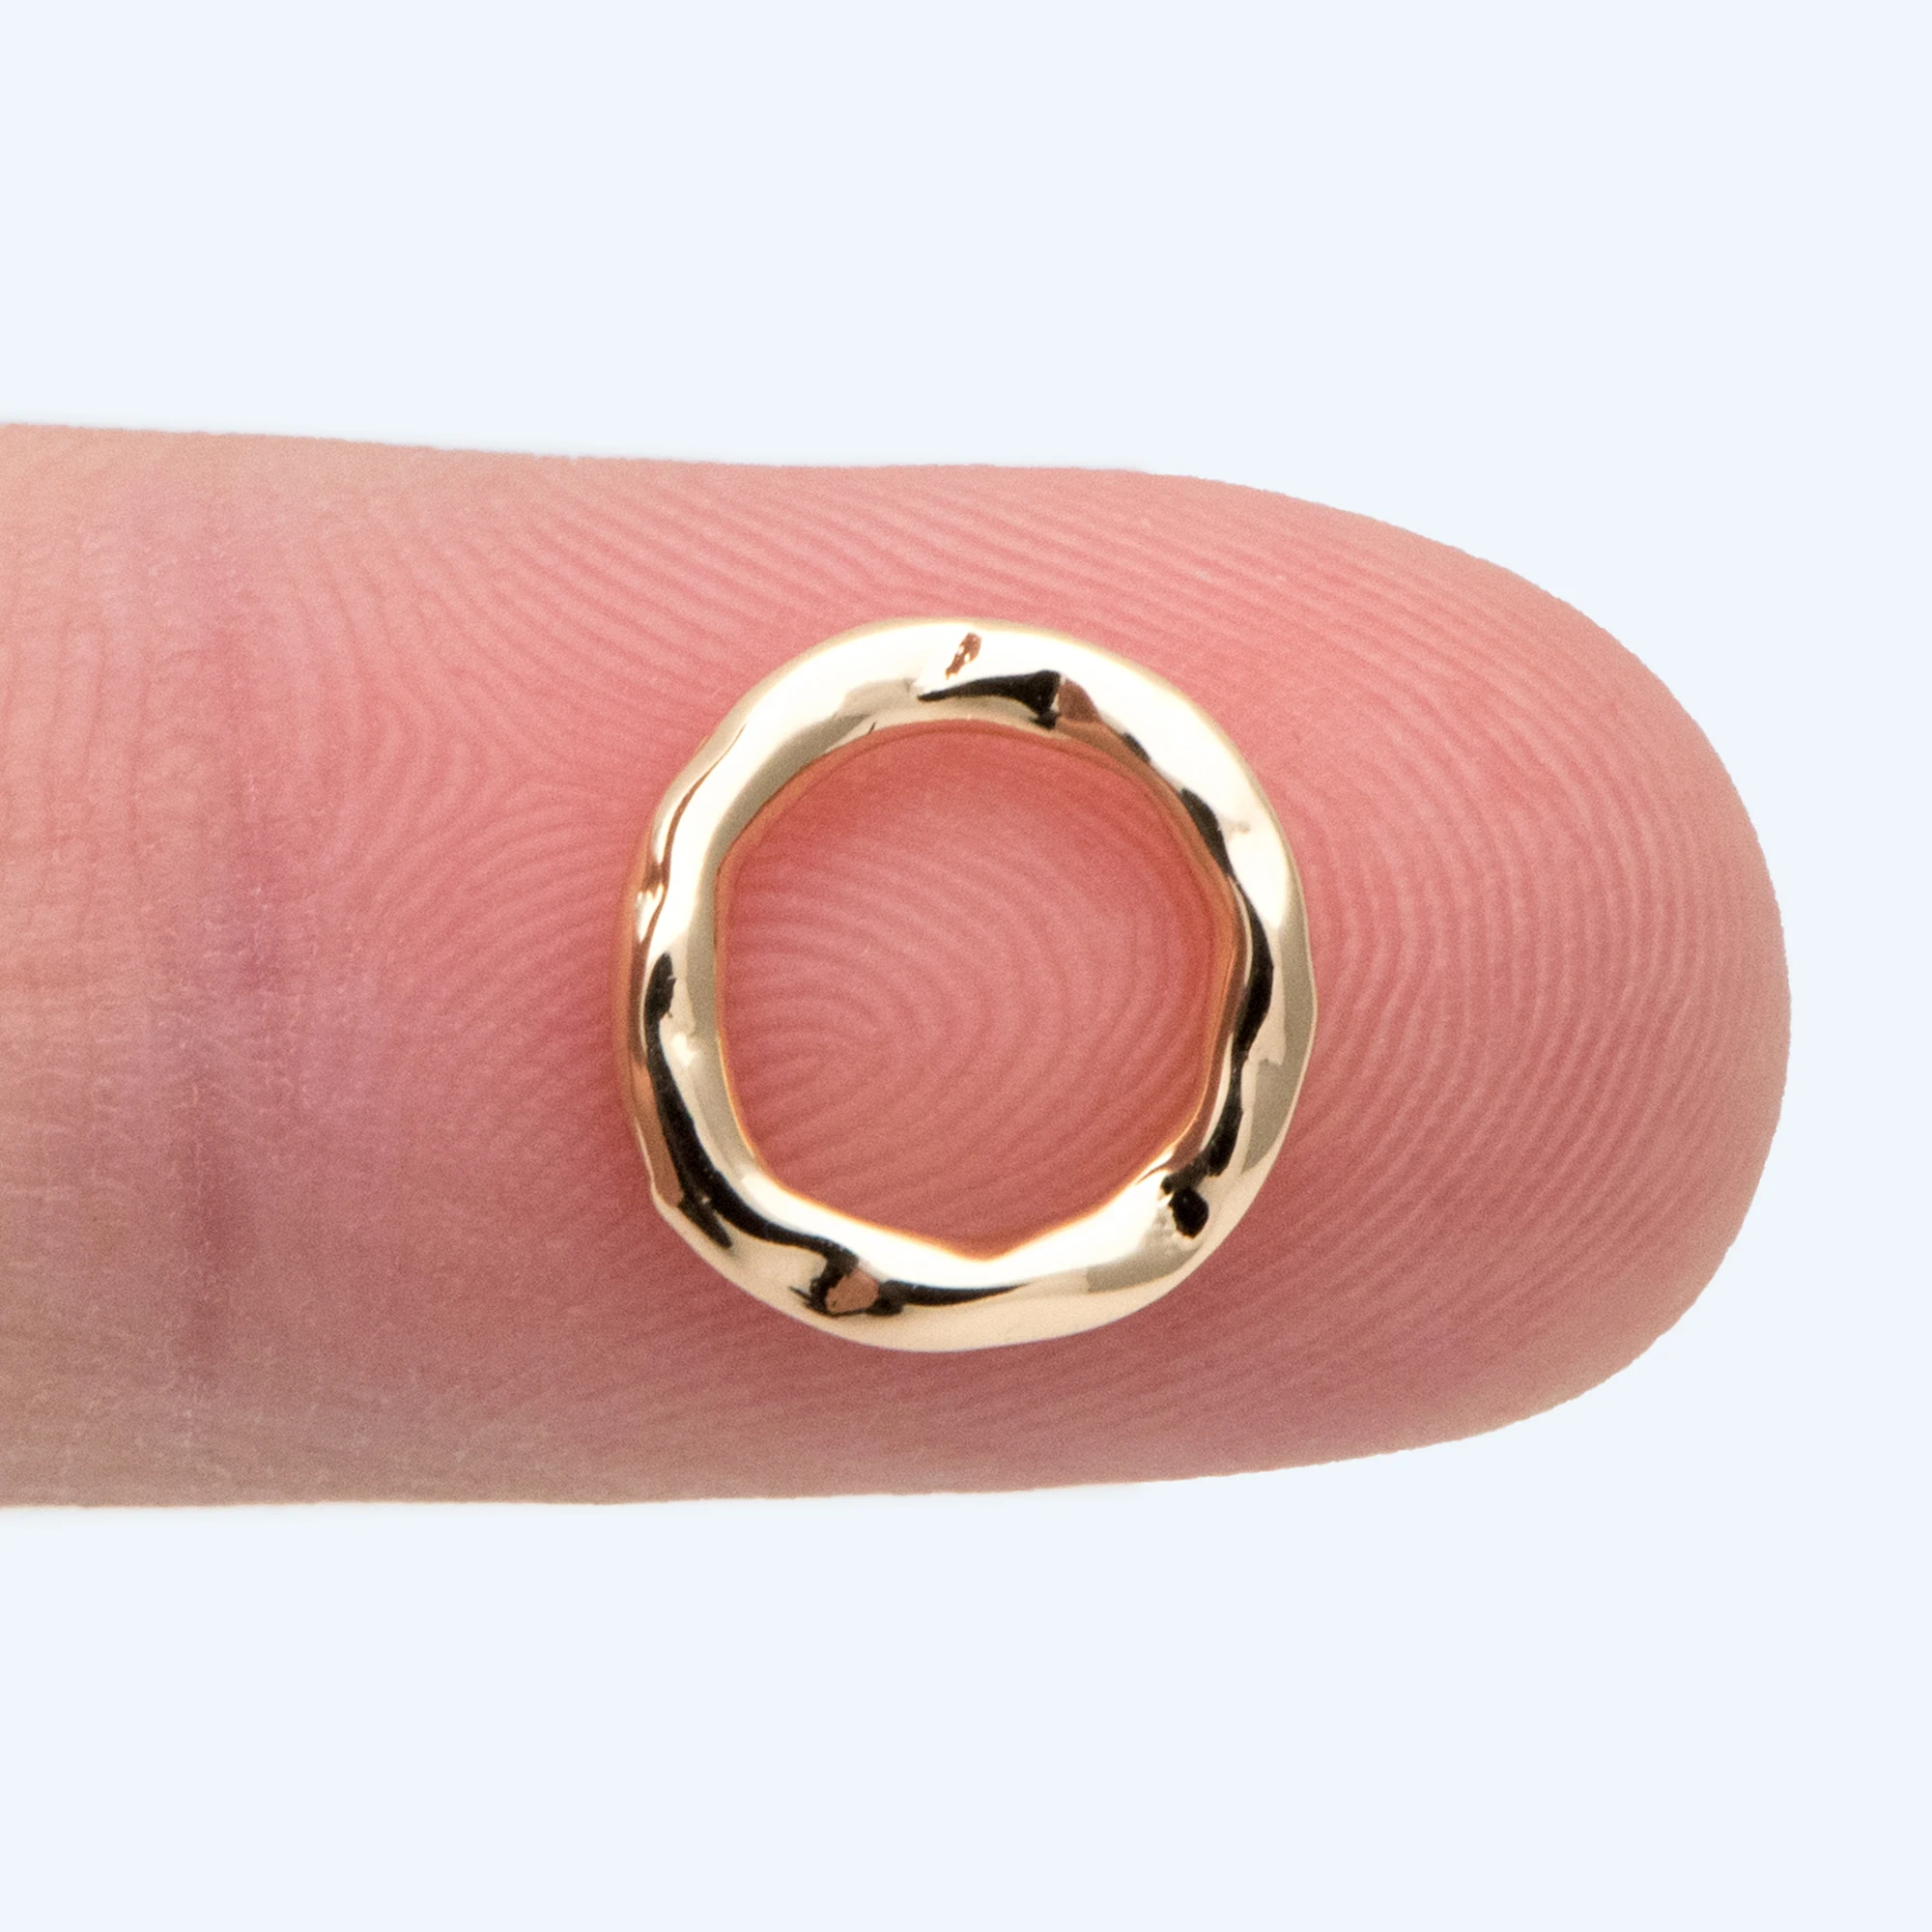 10Pcs ทองไม่สม่ำเสมอแหวน Charms, 18K Gold Plated แหวนทองเหลือง,เรขาคณิตวงกลมจี้ (GB-2750)